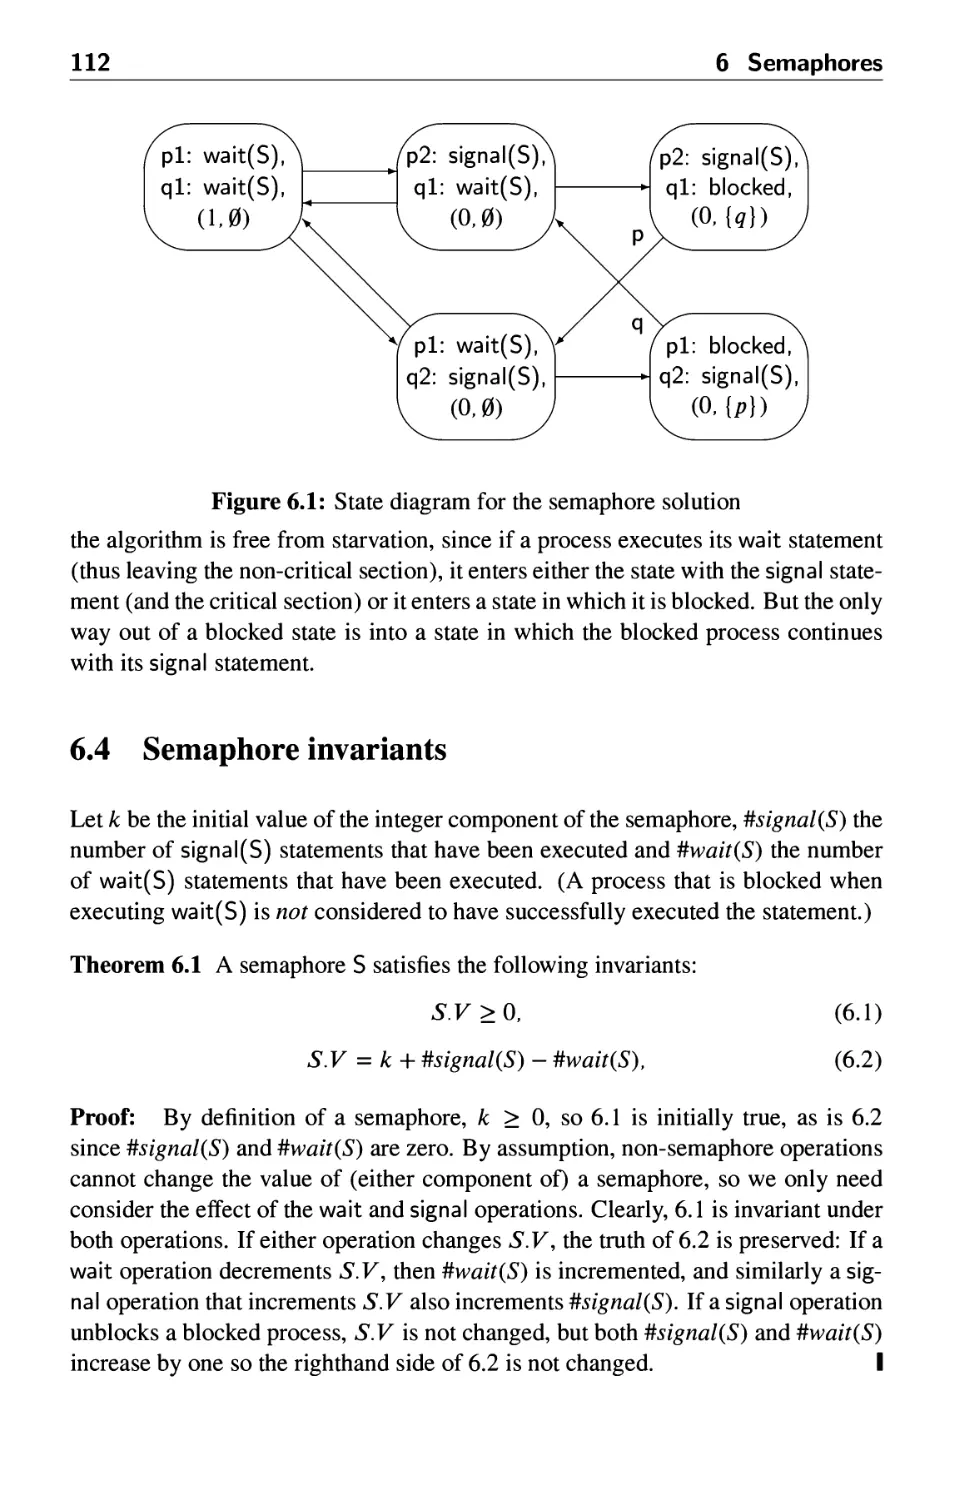 6.4 Semaphore invariants